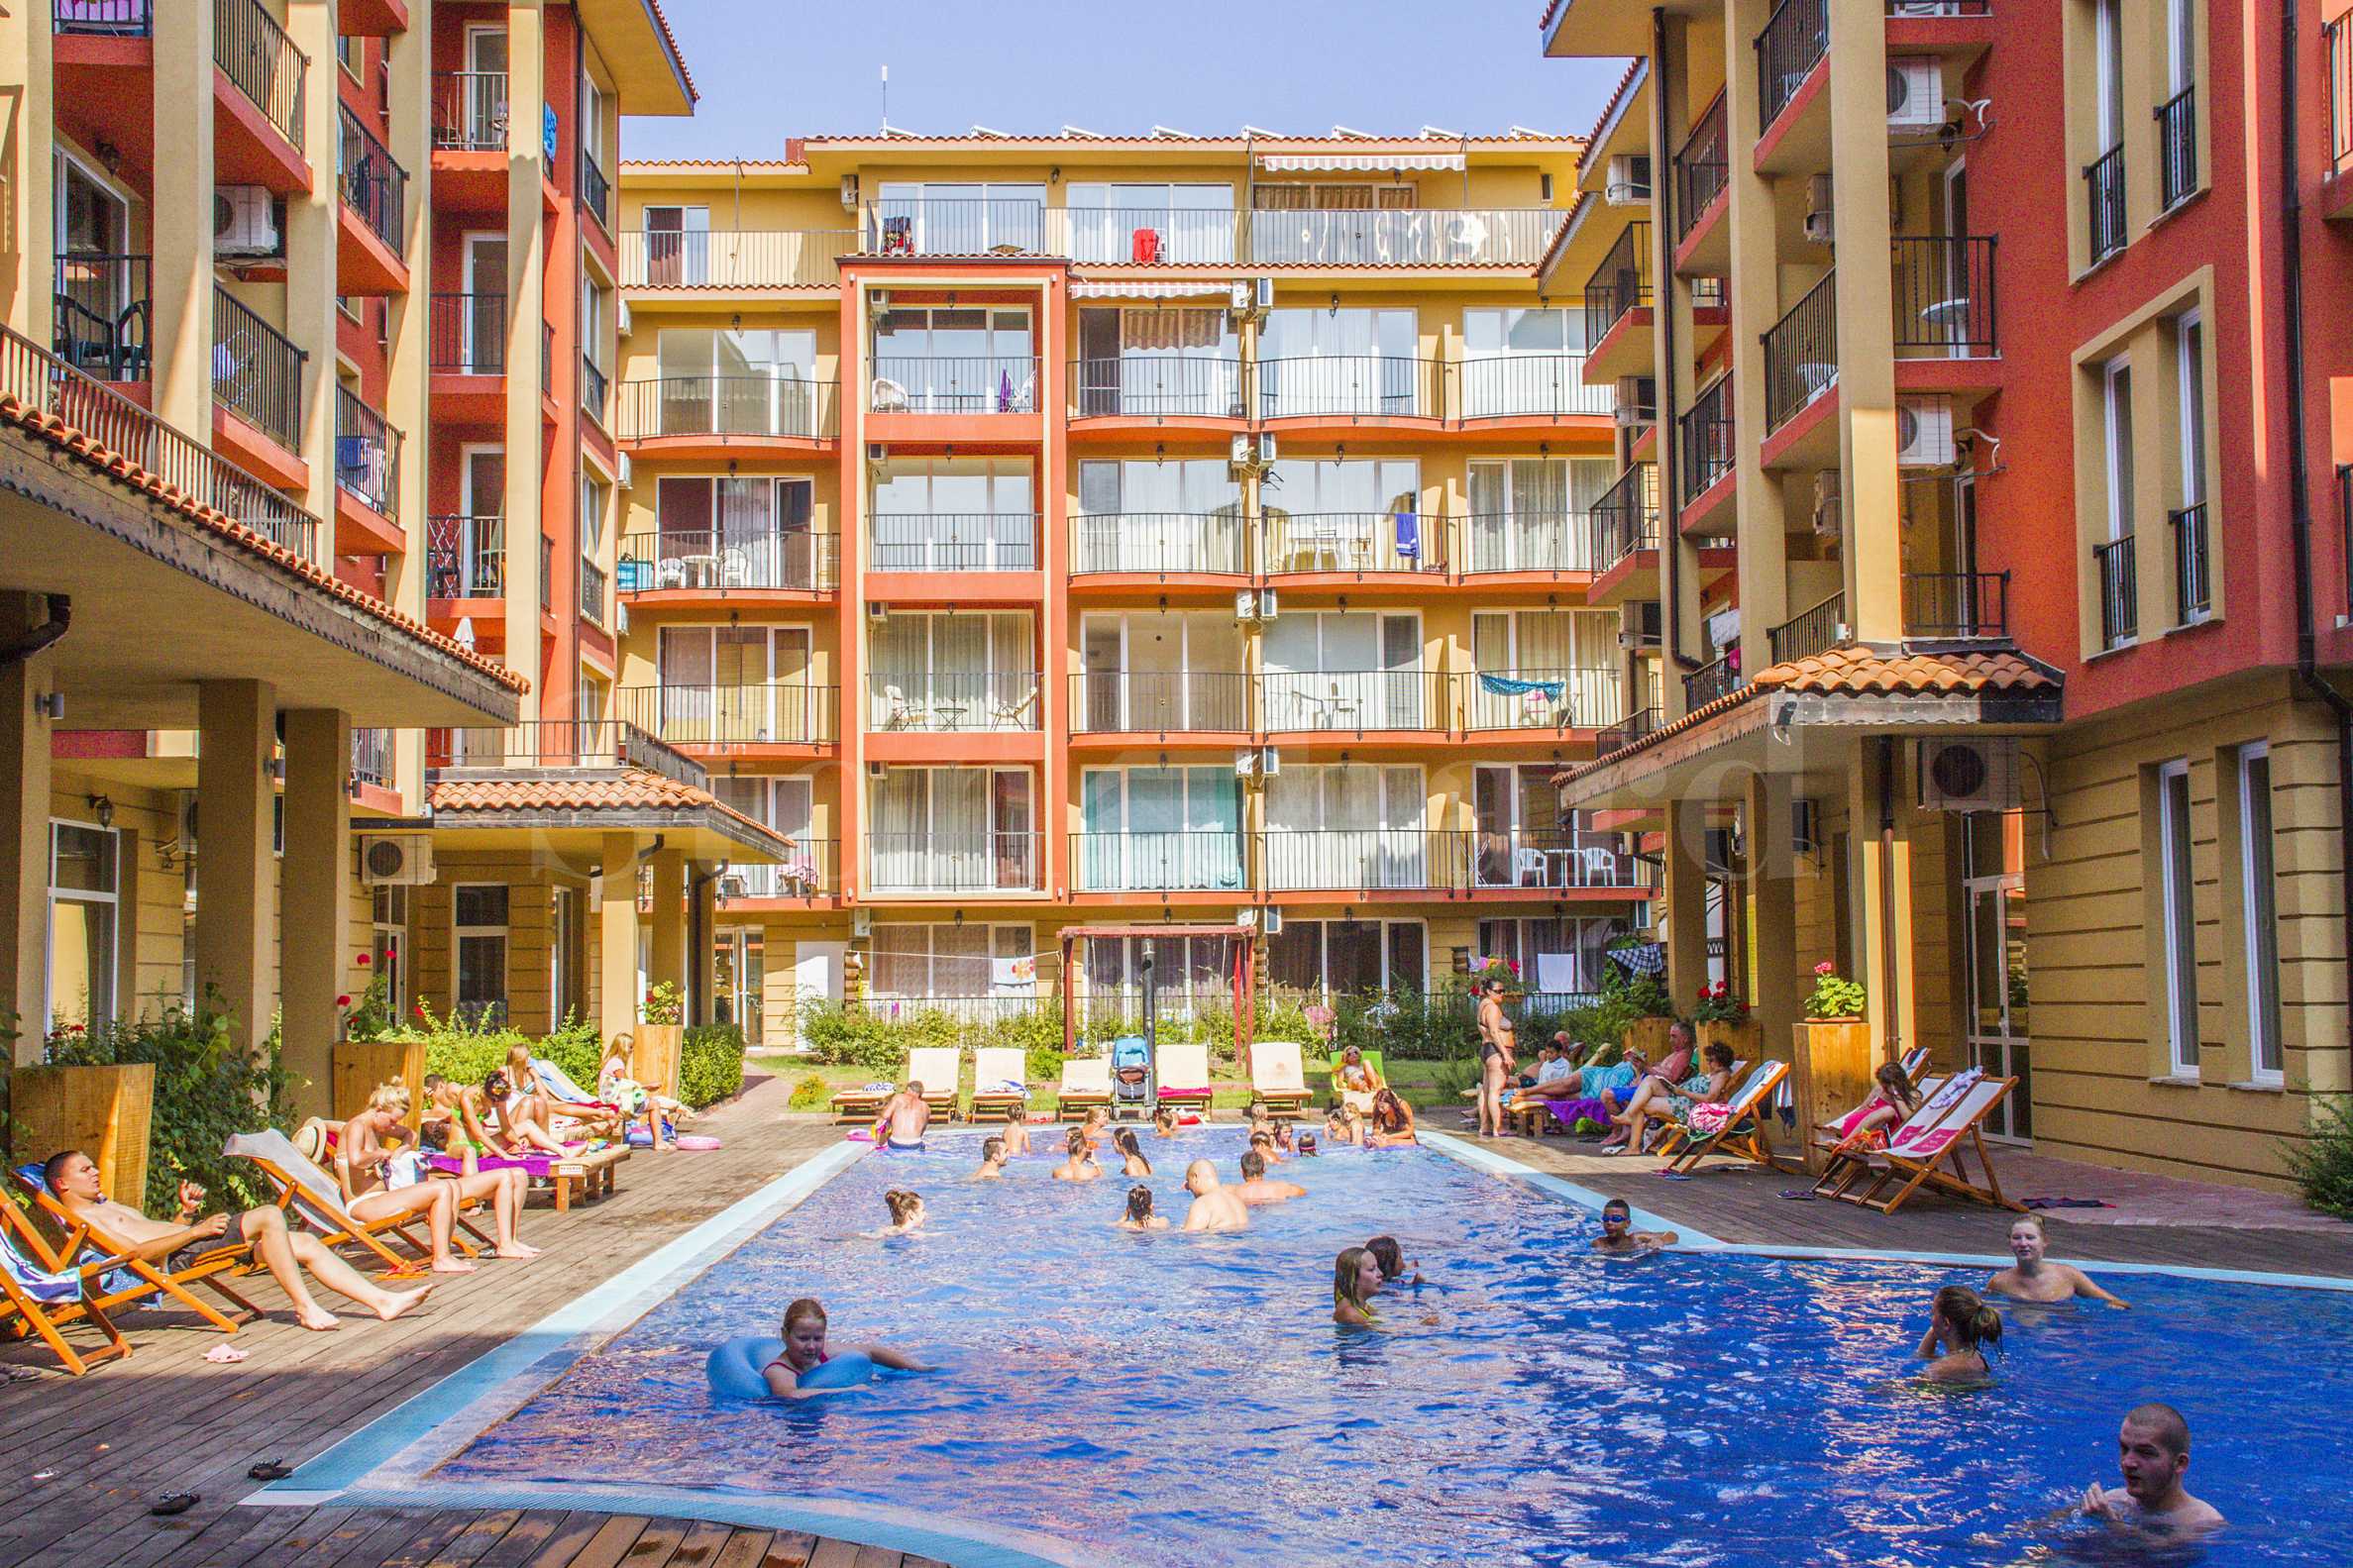 Sunny View - апартаменти на топ цени от 560 €/м2 до Cacao Beach2 - Stonehard